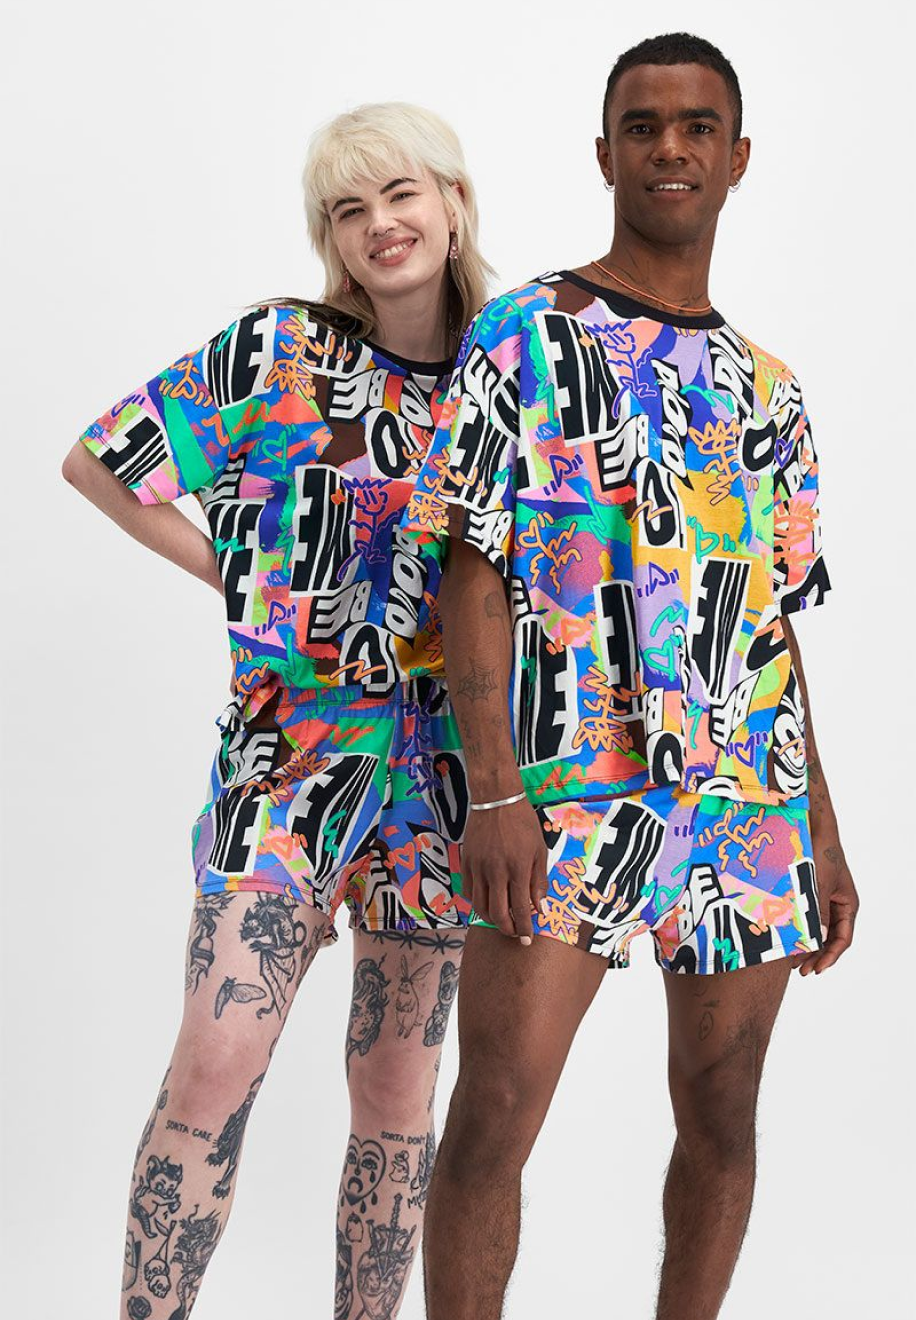 Two models wearing the Kris Andrew Smalls bonds underwear